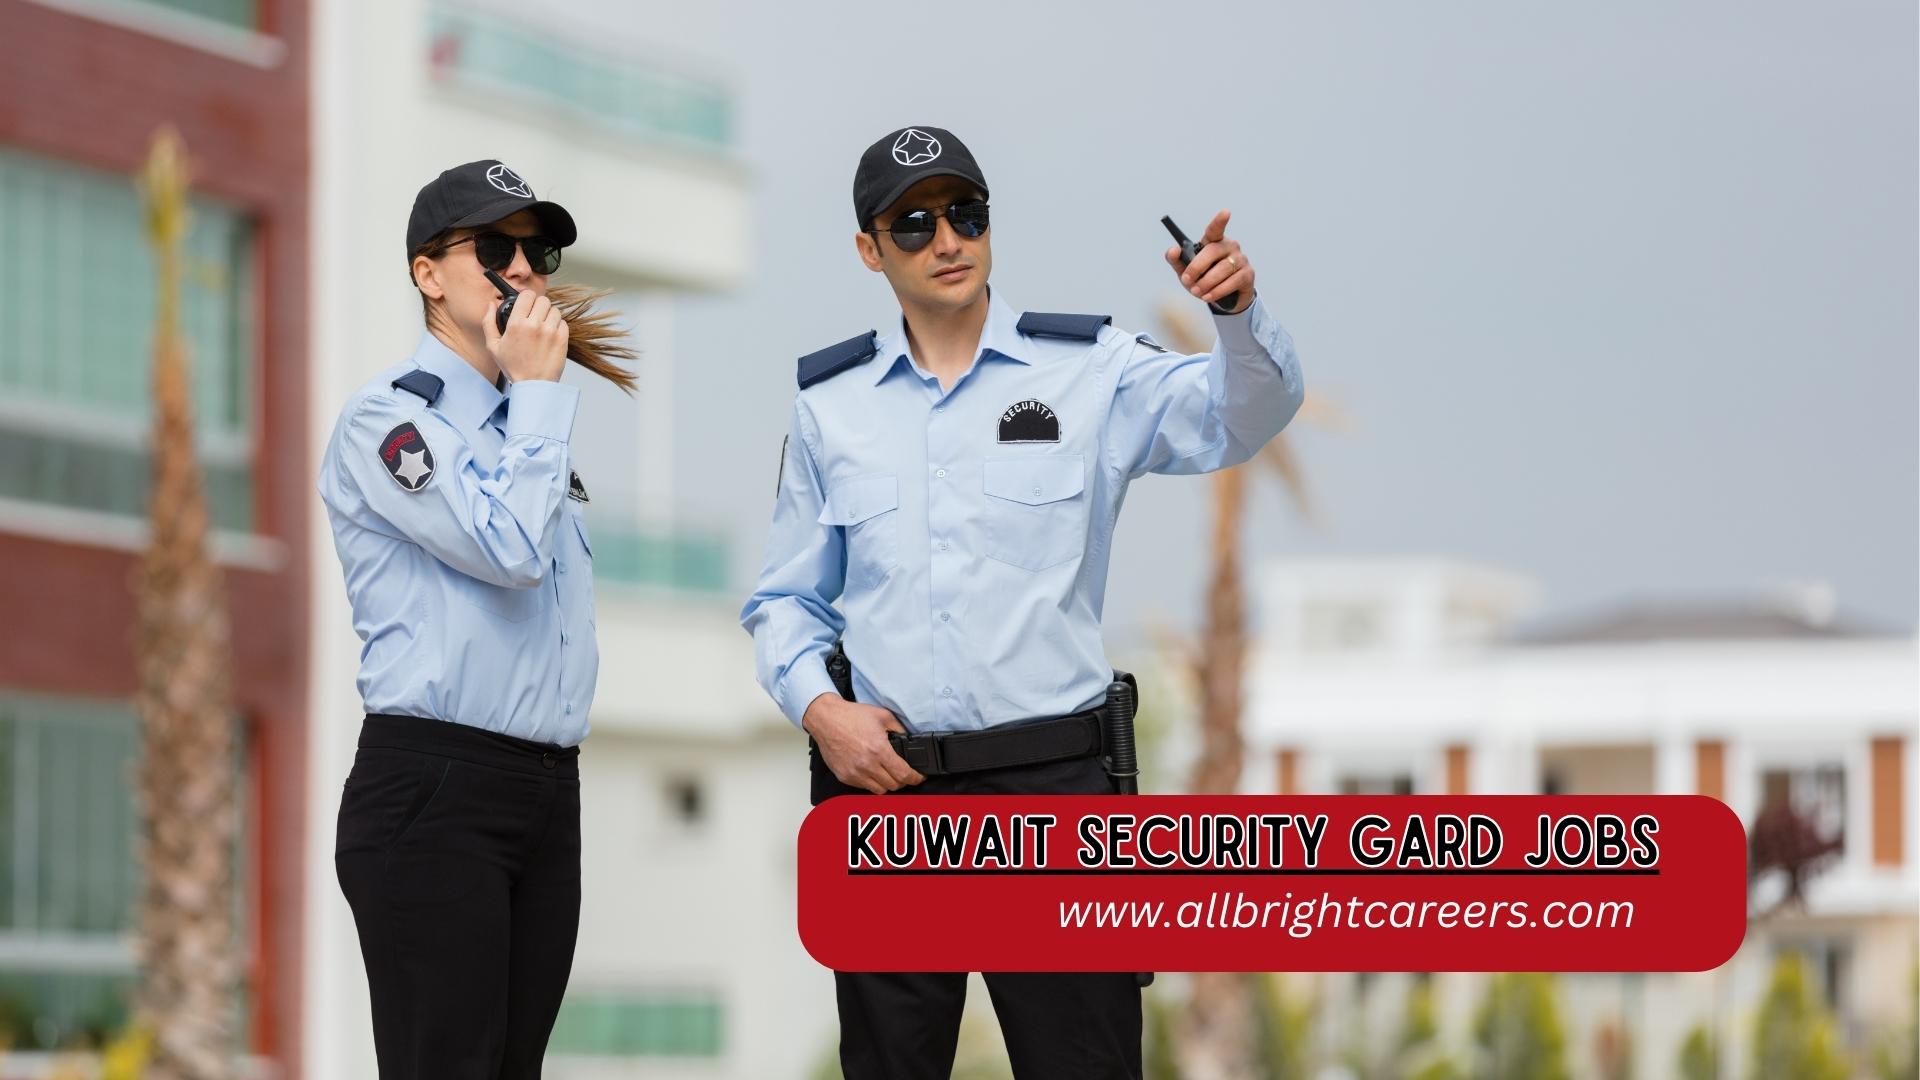 Kuwait Security Gard jobs